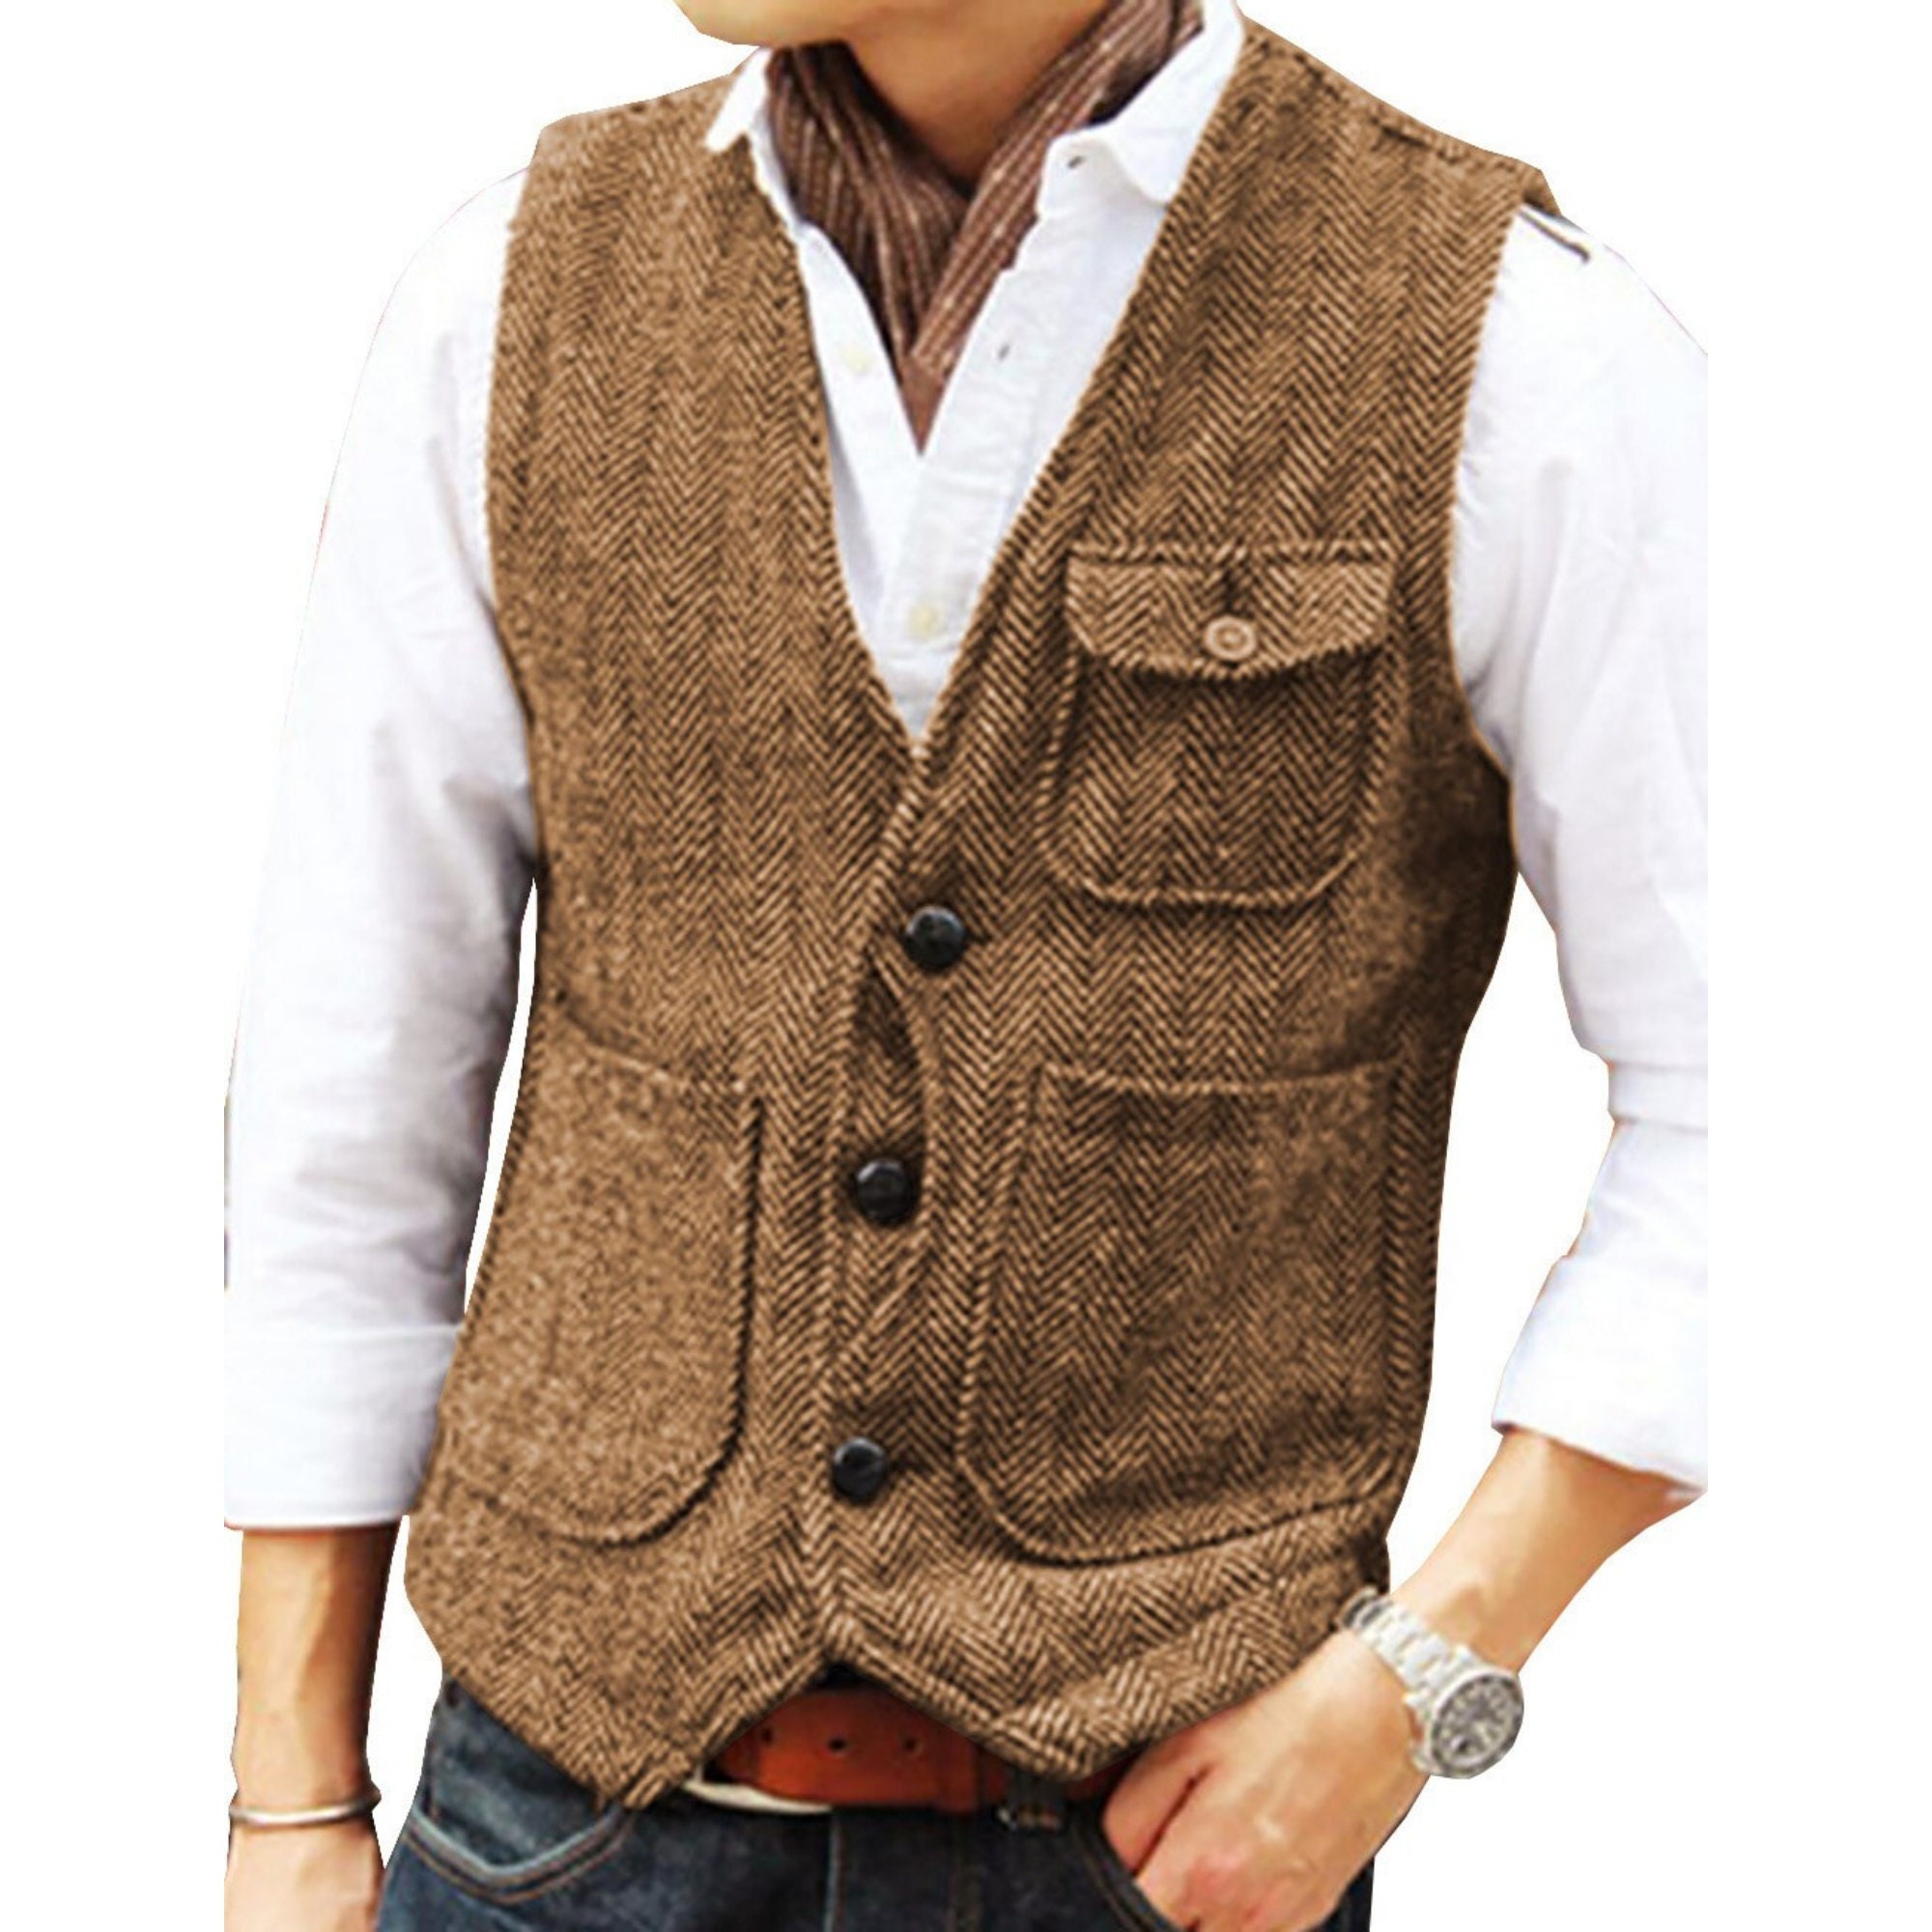 Get the Best Deals Ceehuteey Men's Vintage Suit Tweed Vests Wool Casual ...